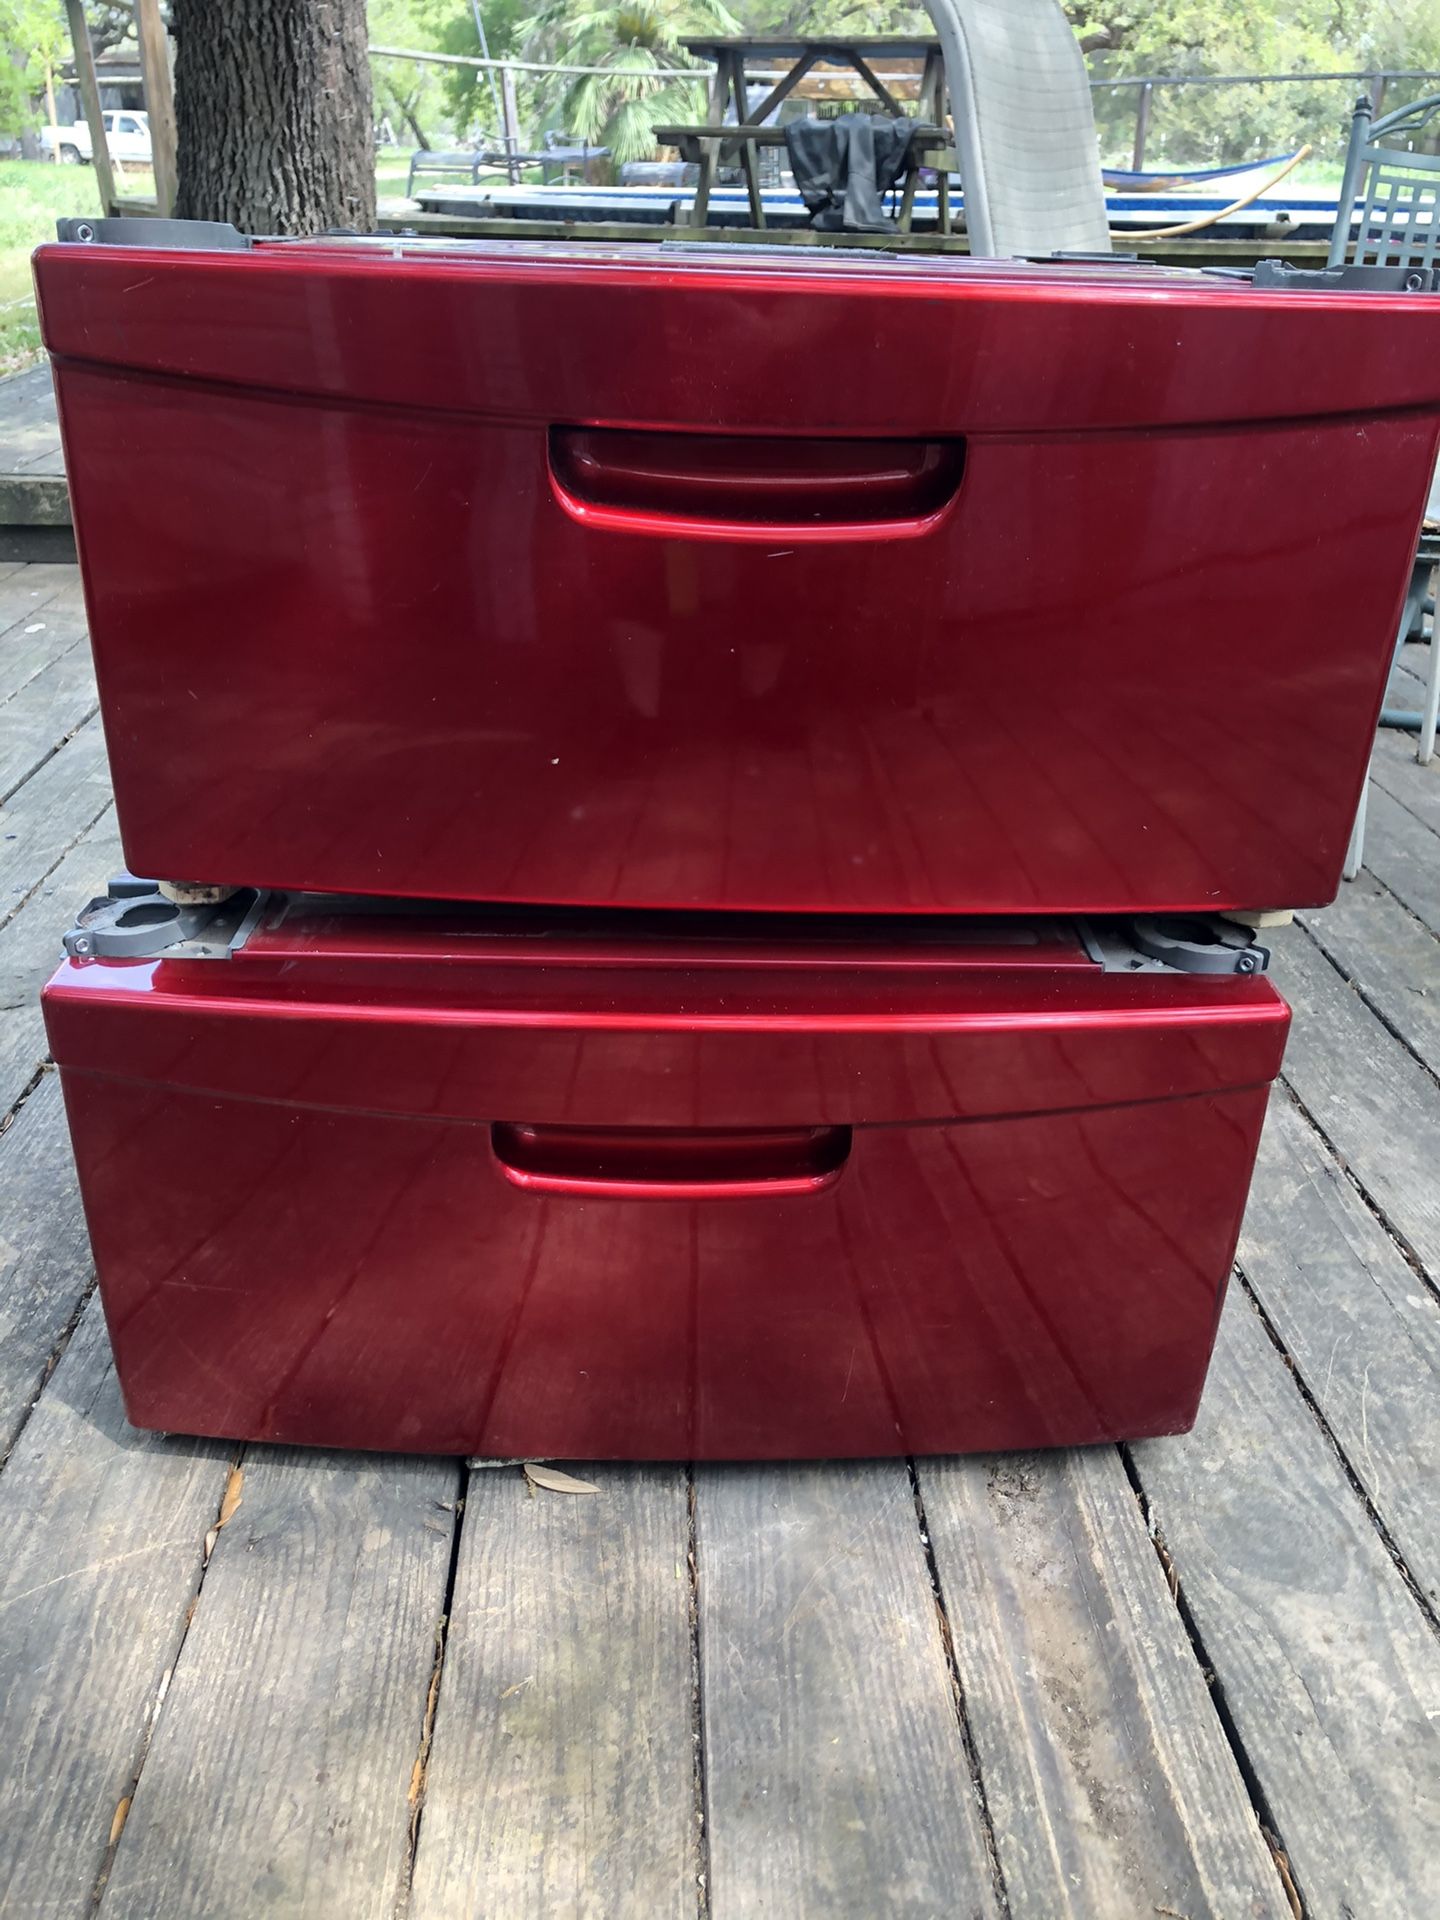 Red front load washer/dryer pedestals